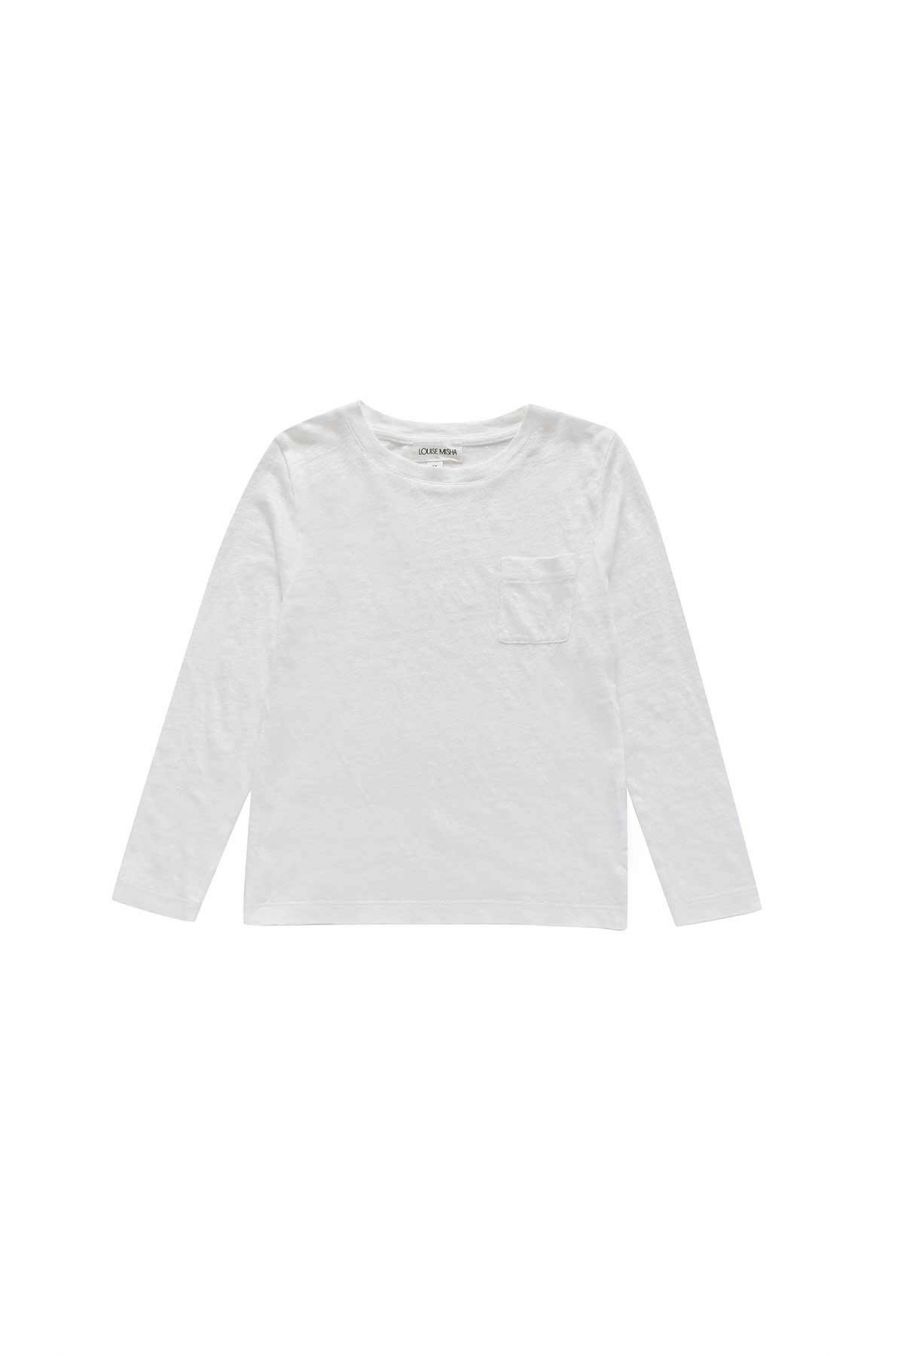 garccon-t-shirt-stano-white